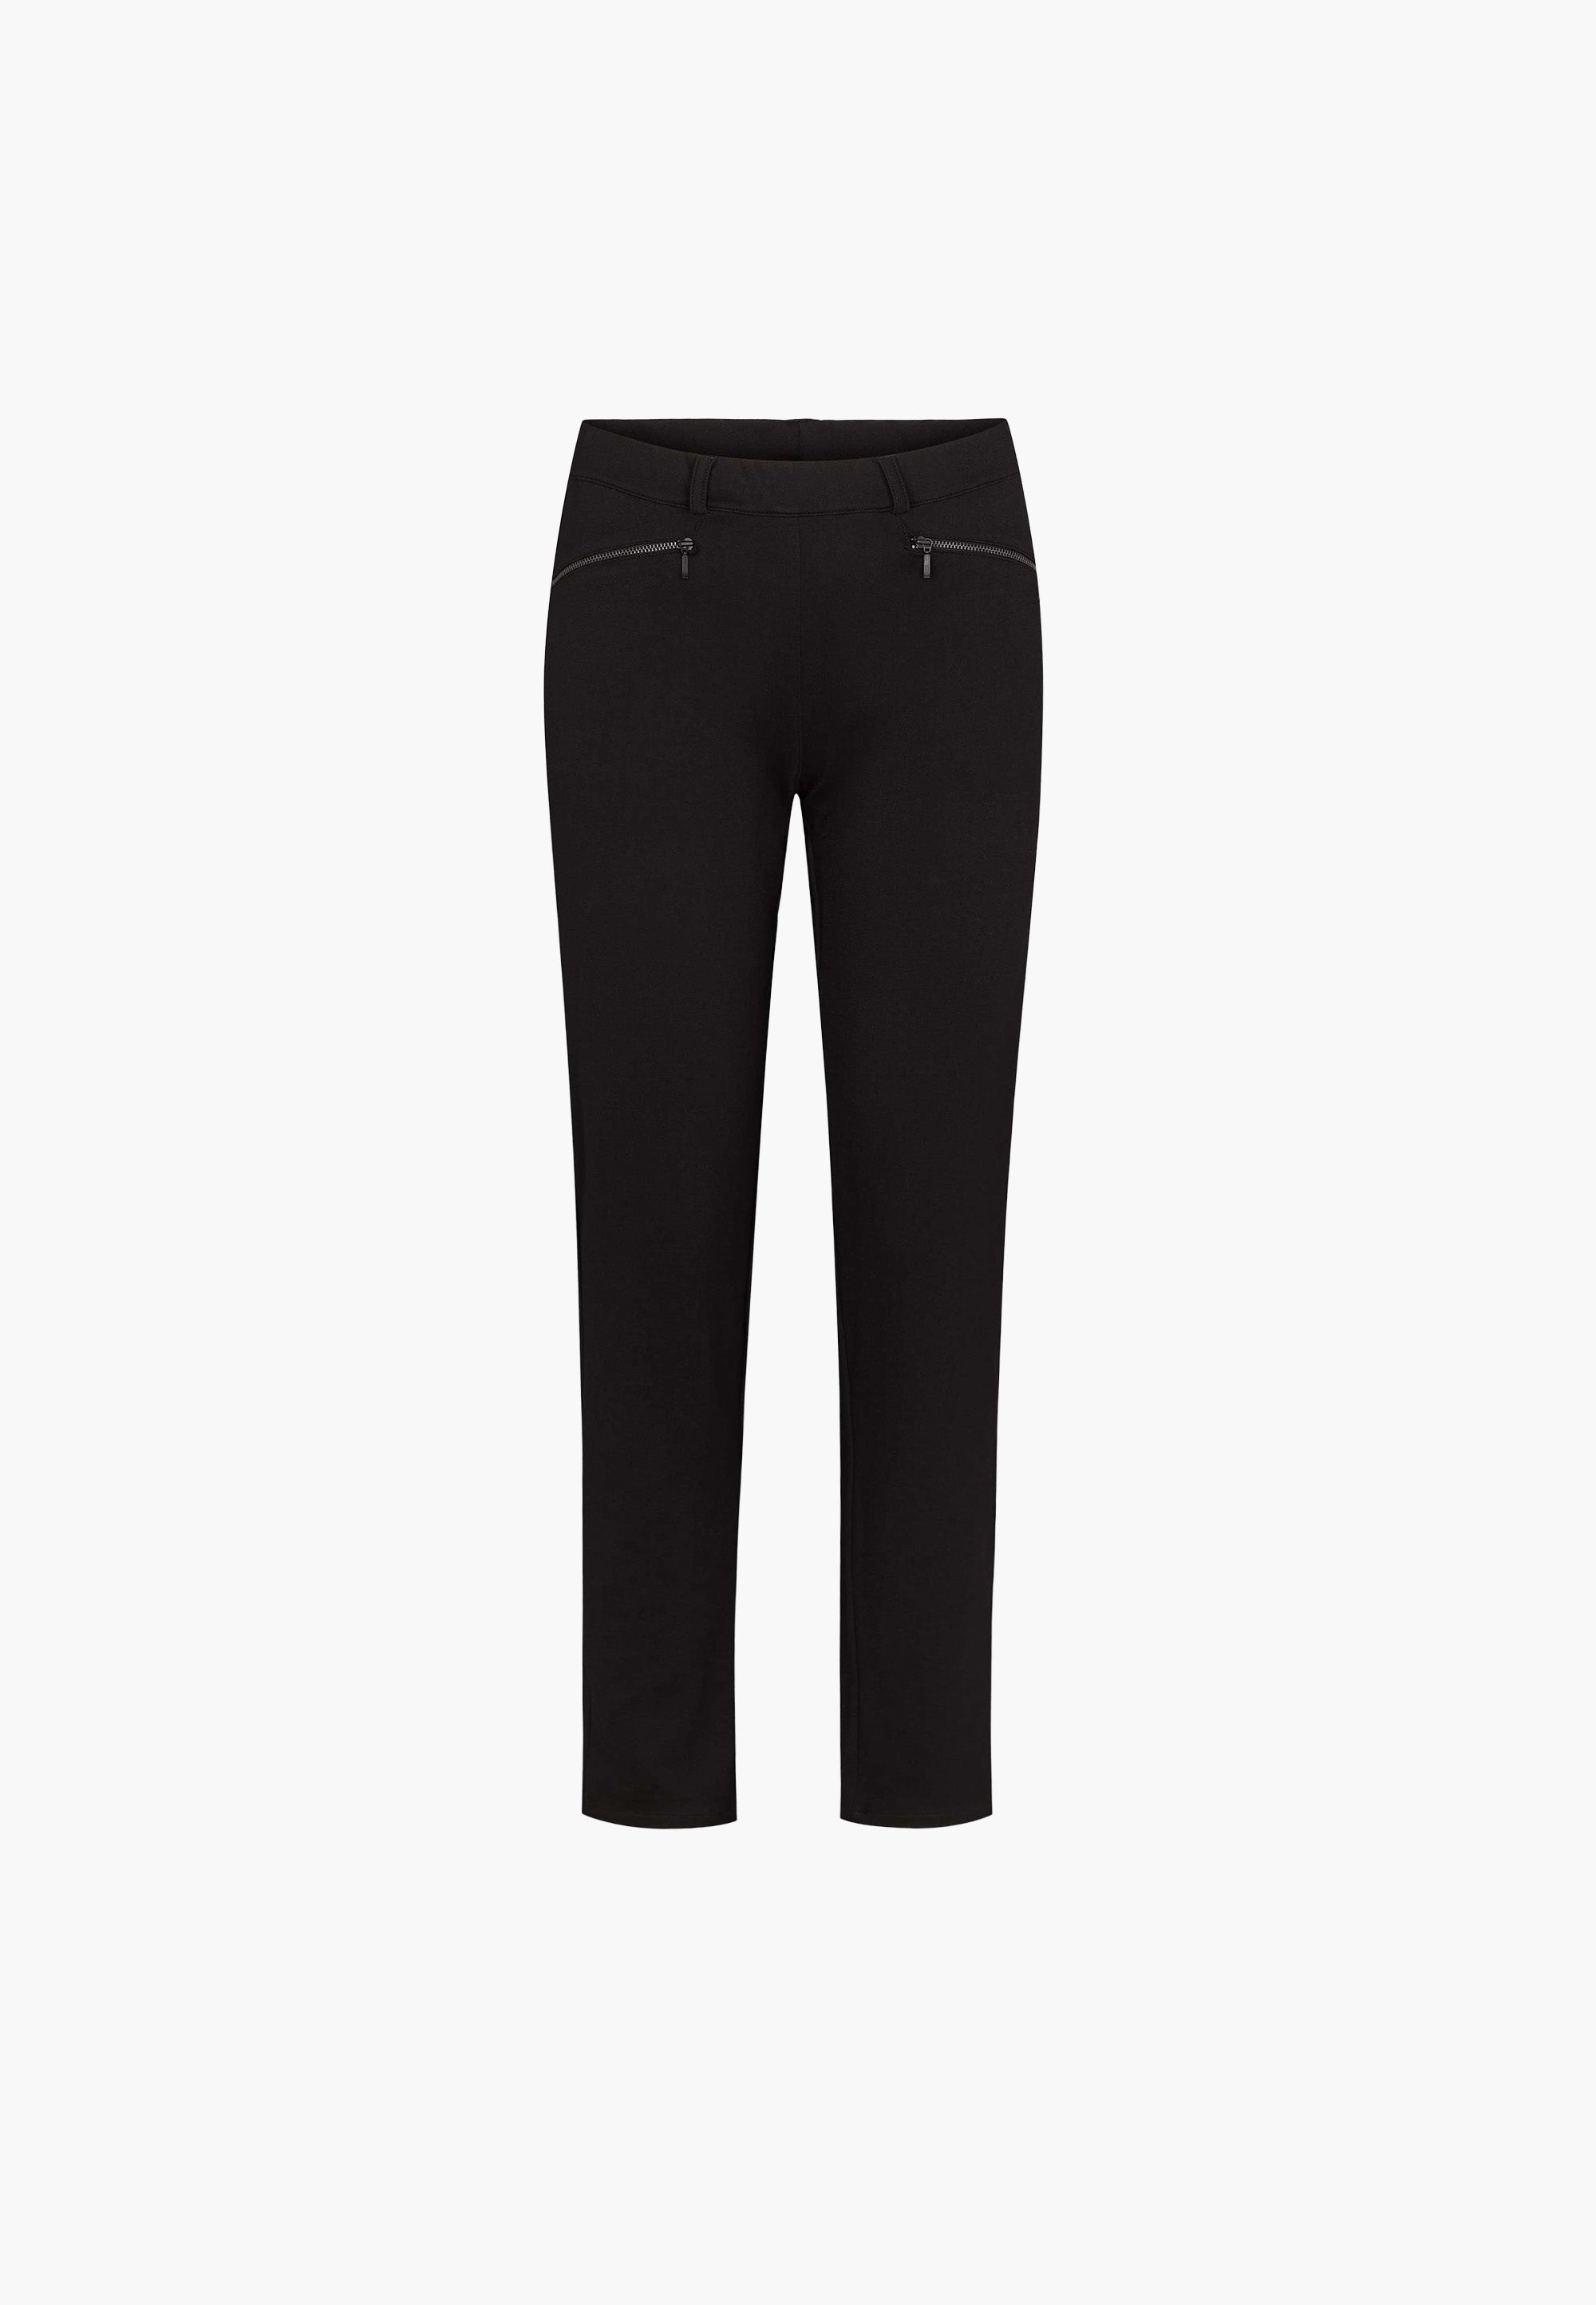 LAURIE  Rylie Regular - Medium Length Trousers REGULAR 99143 Black brushed